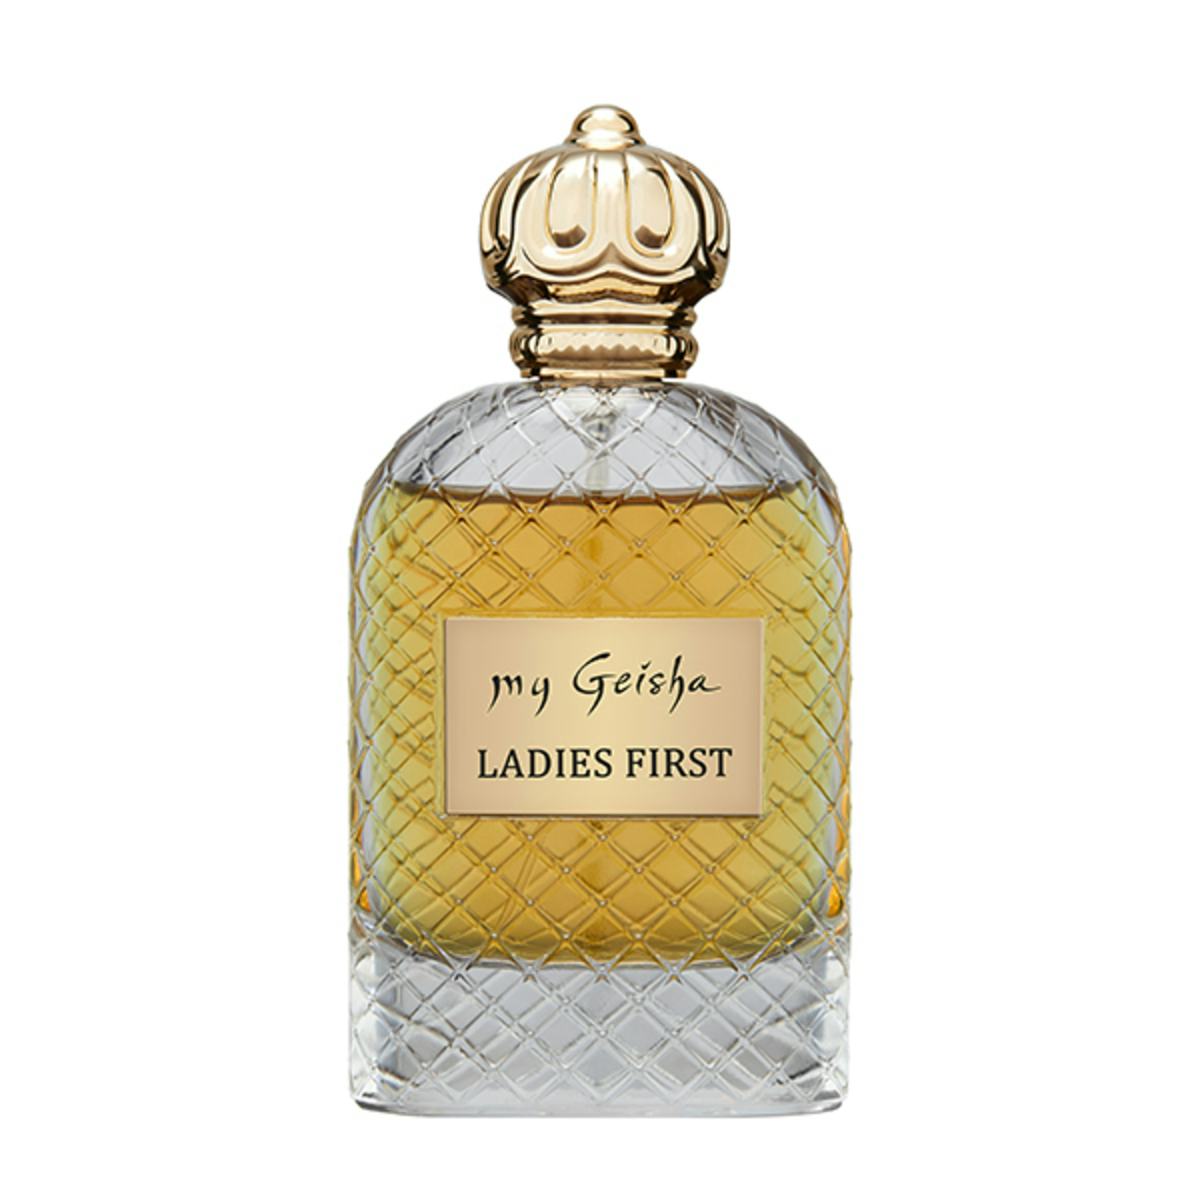 Extrait de parfum "Ladies First" 100 ml, prodotto artigianale per la vendita diretta in Svizzera